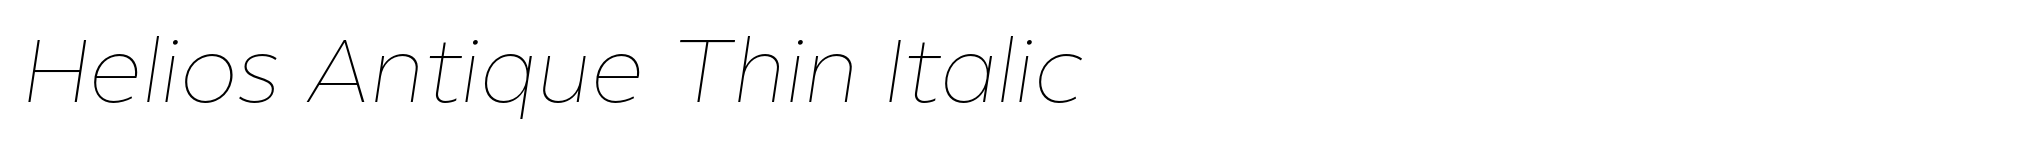 Helios Antique Thin Italic image